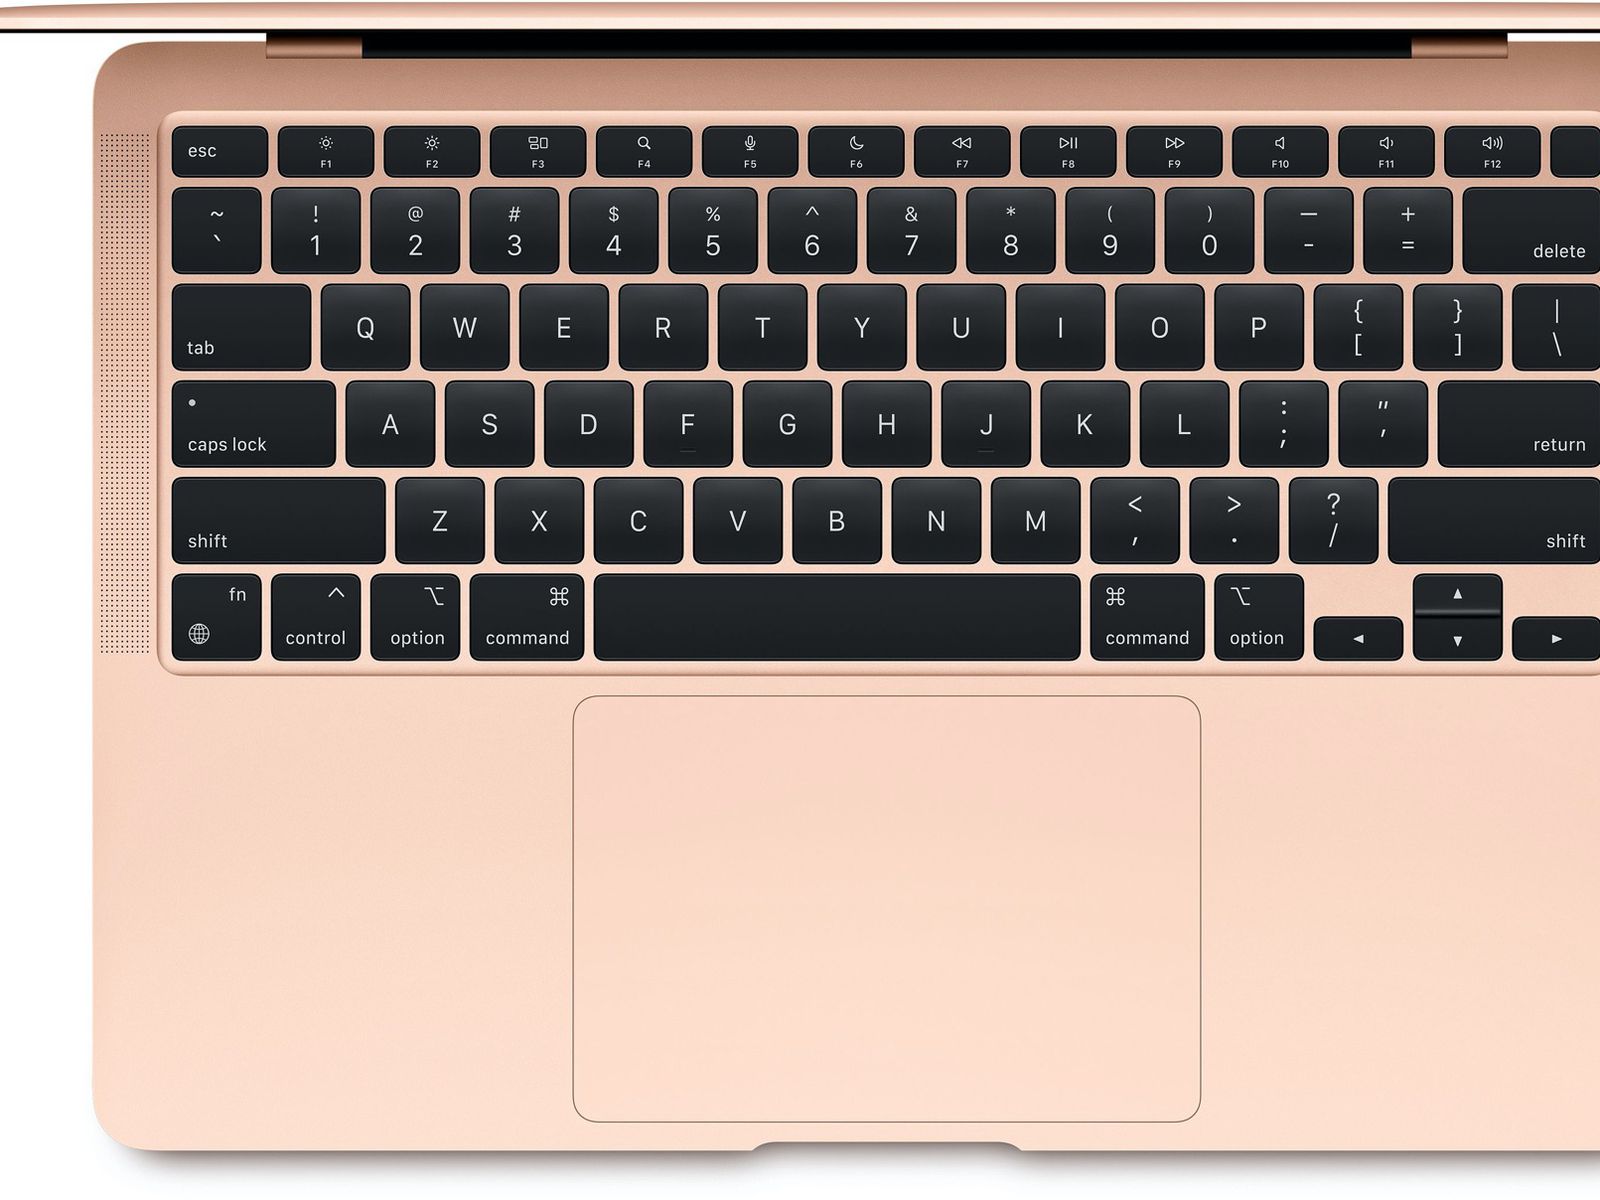 M1 Macs Support WiFi 6, MacBook Air Has Updated Function Keys 